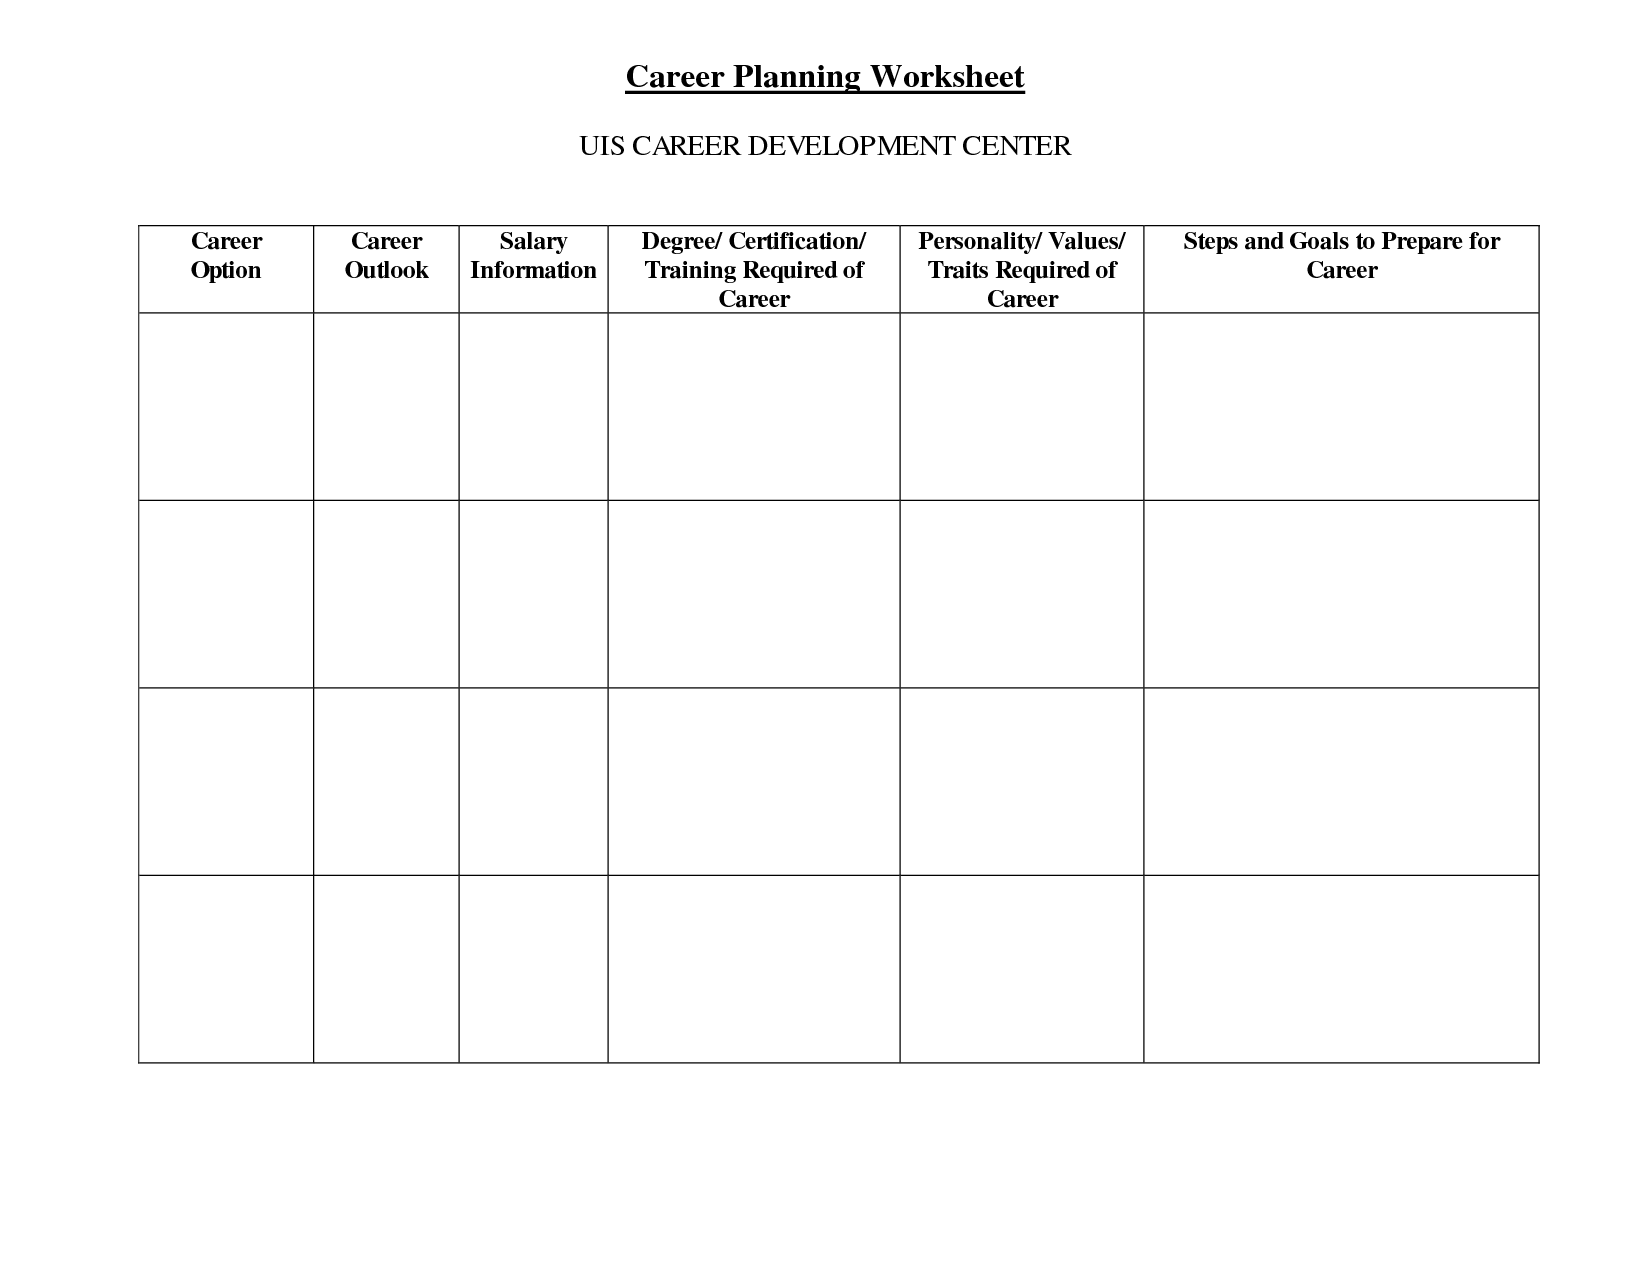 Career Planning Worksheet Image